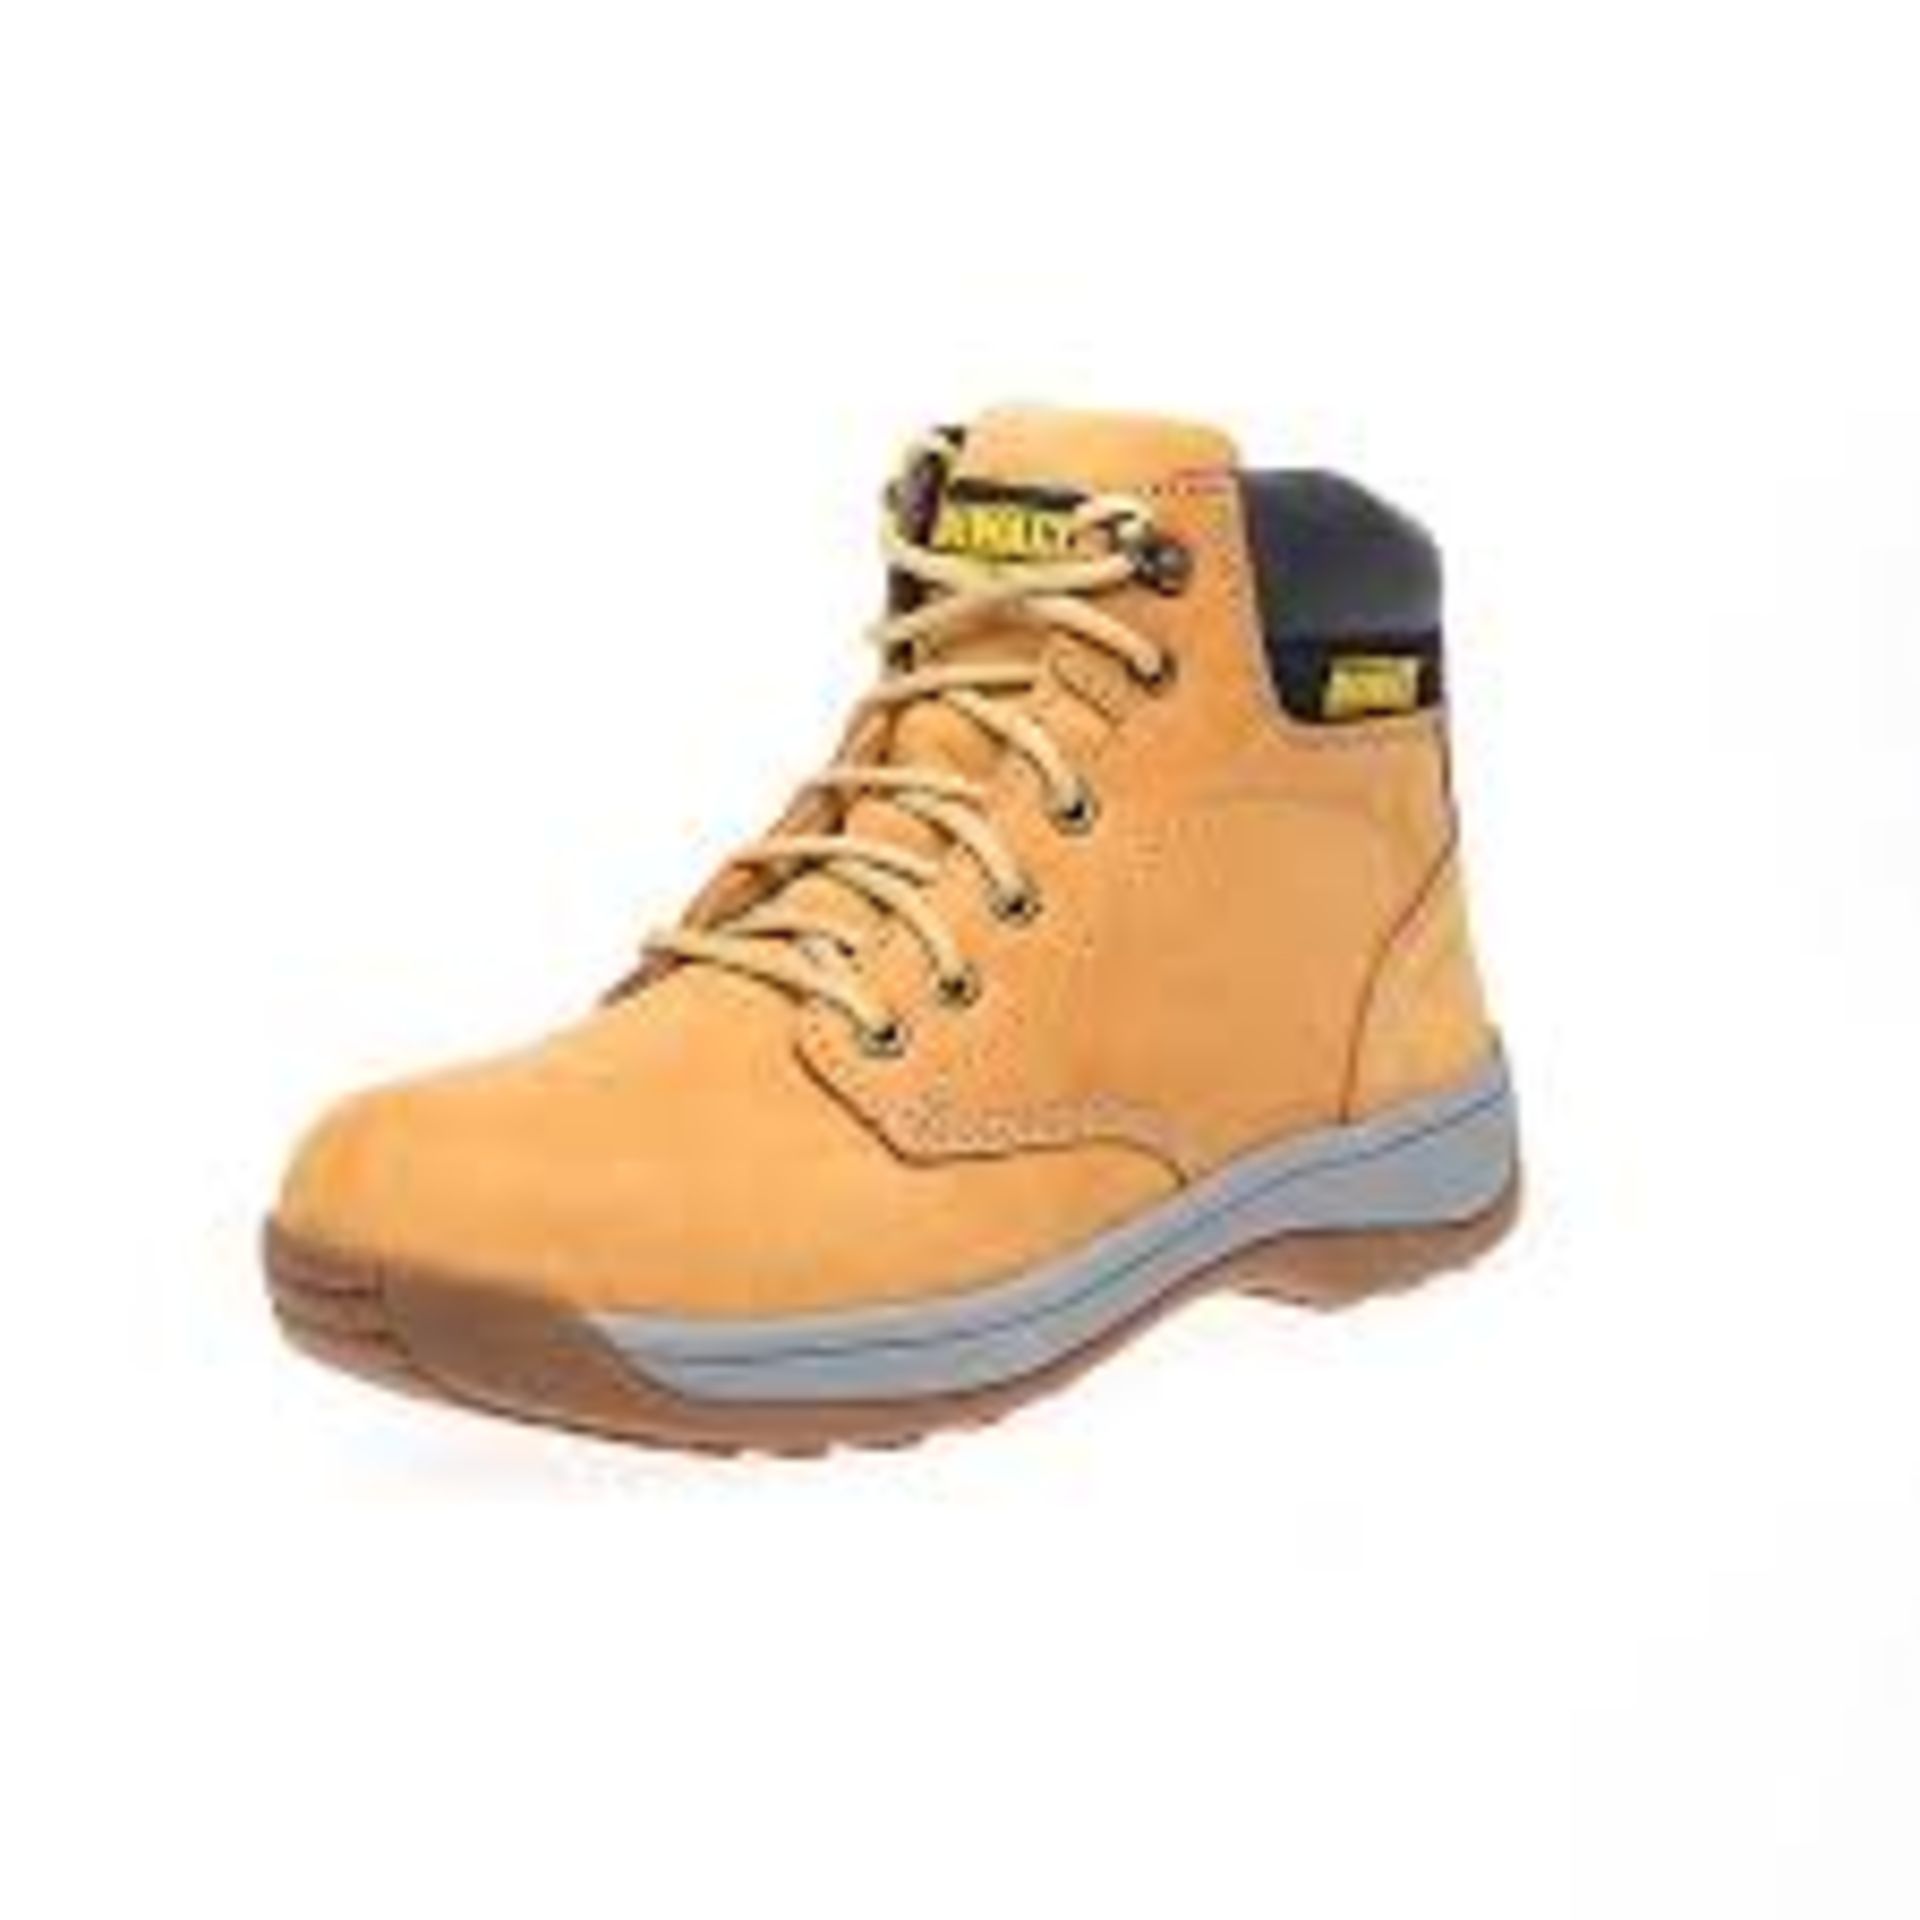 DeWalt Craftsman Safety boots, Size 11. - PW. DeWalt's Craftsman leather safety boot is ideal for